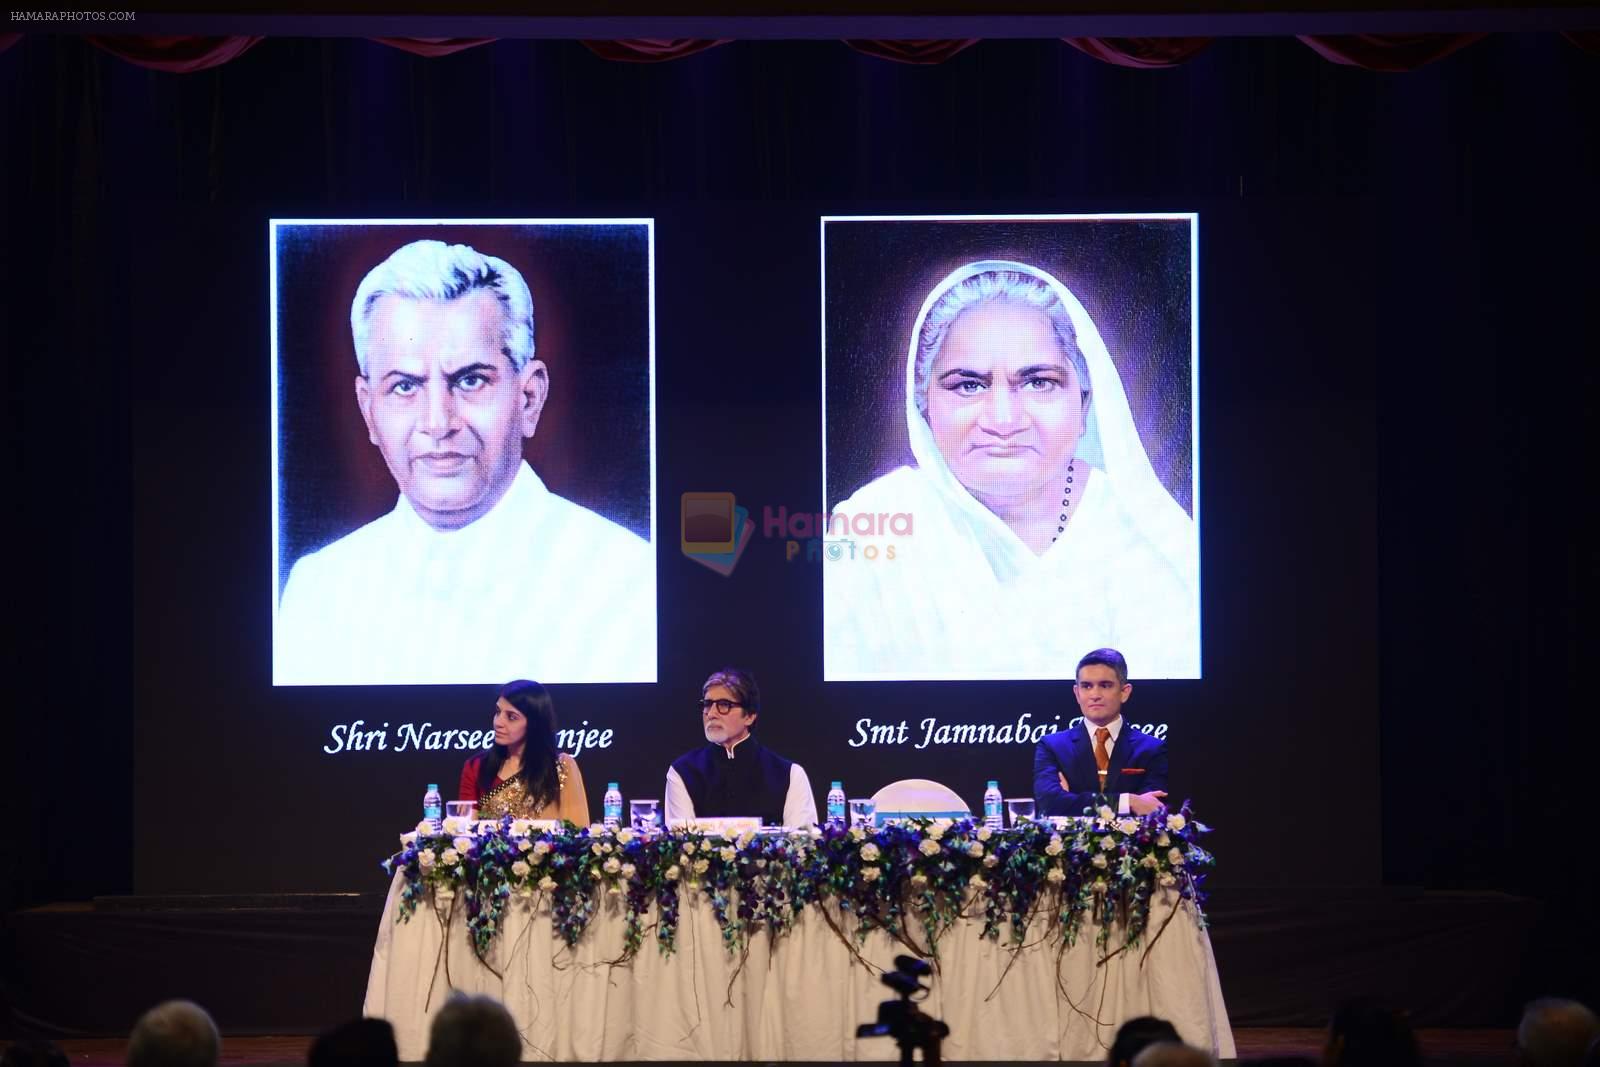 Amitabh Bachchan inaugurates  Jamnabai Narsee international school on 25th July 2015